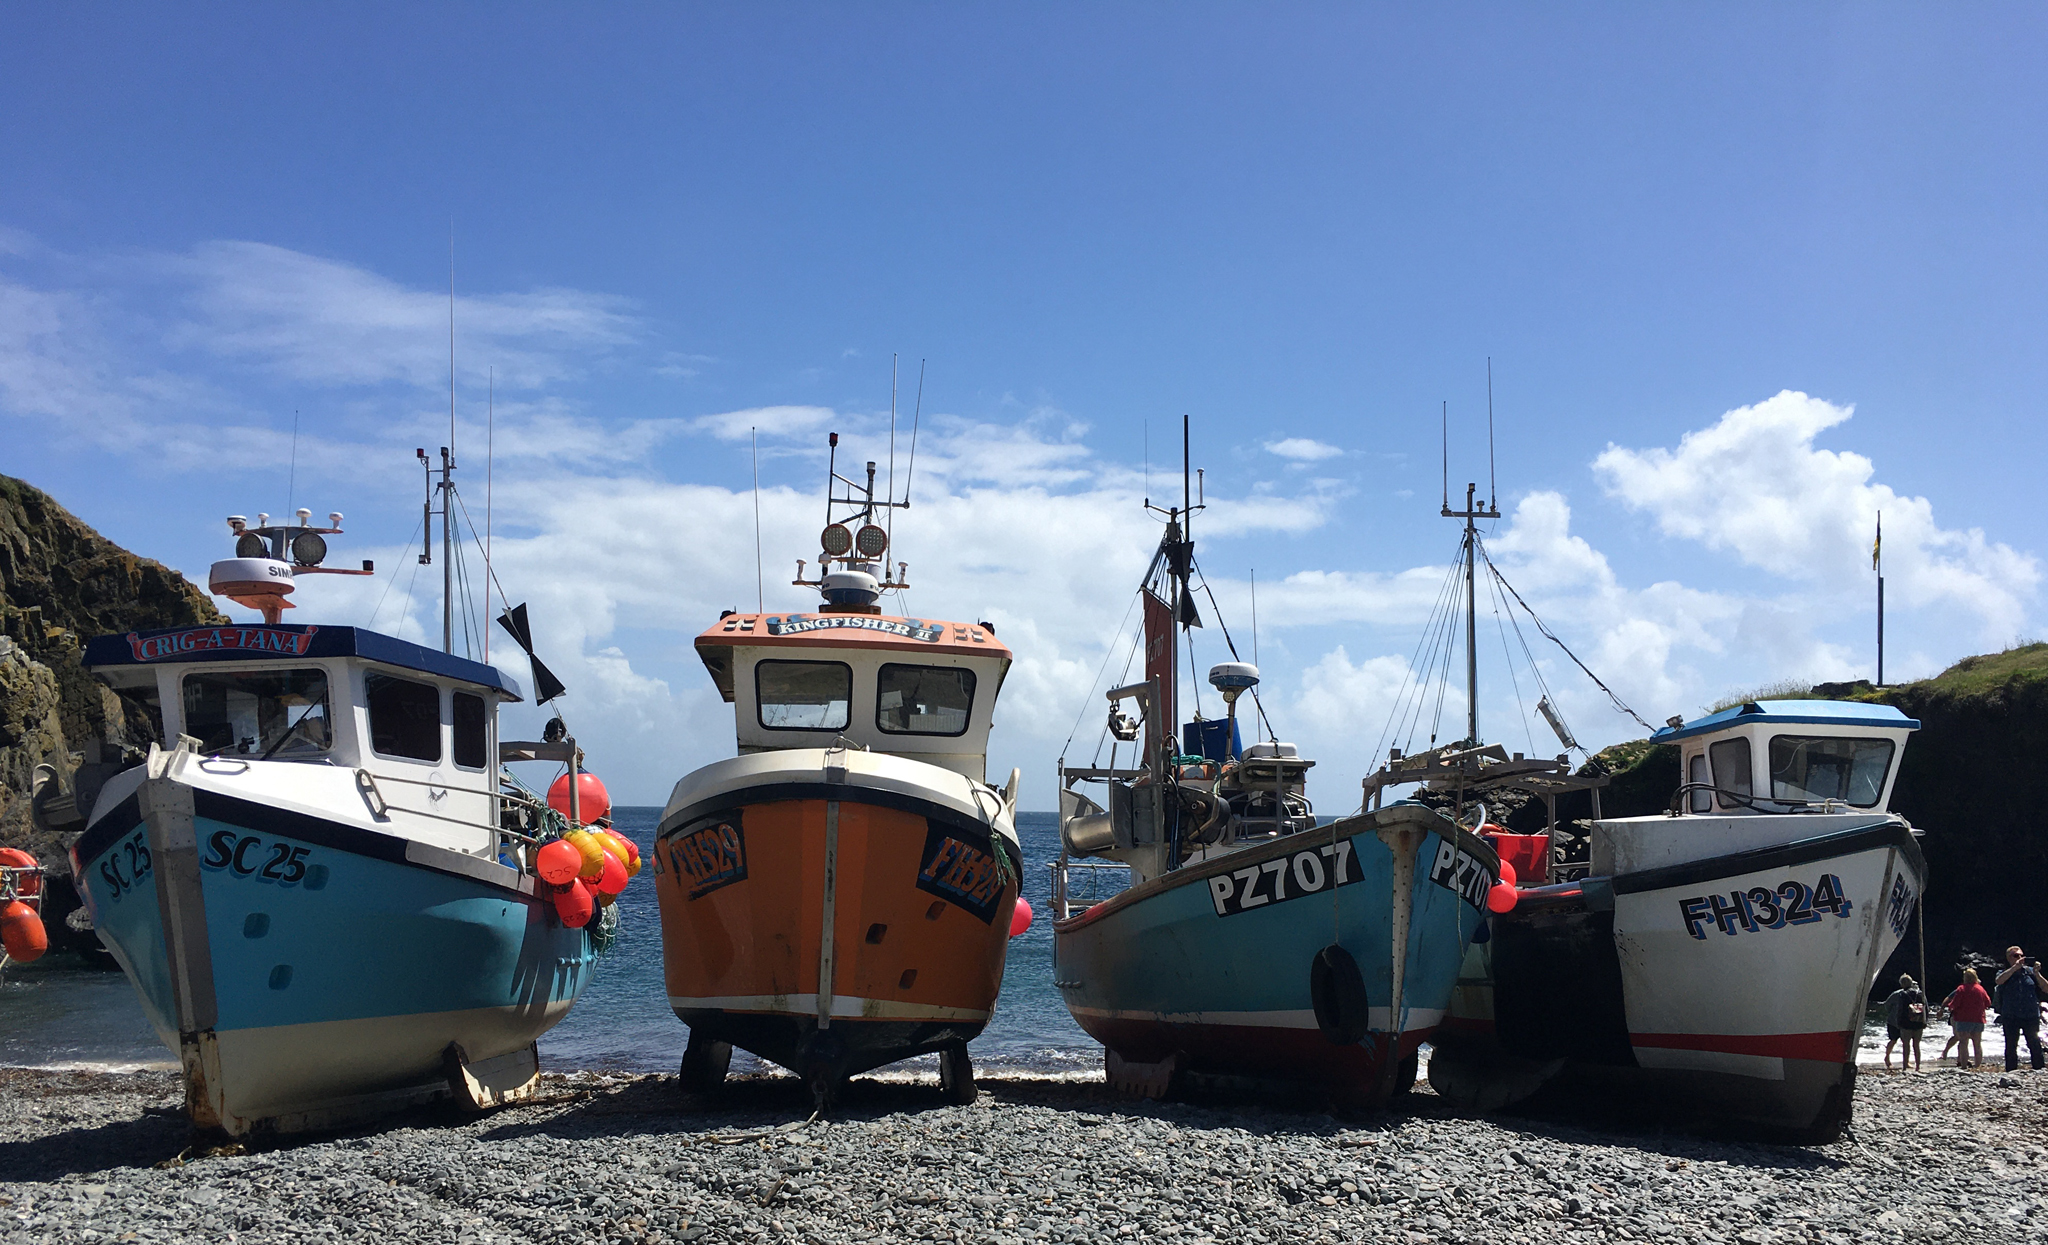 Sightseeing tours of Cornwall viewing Cornish fishing boats